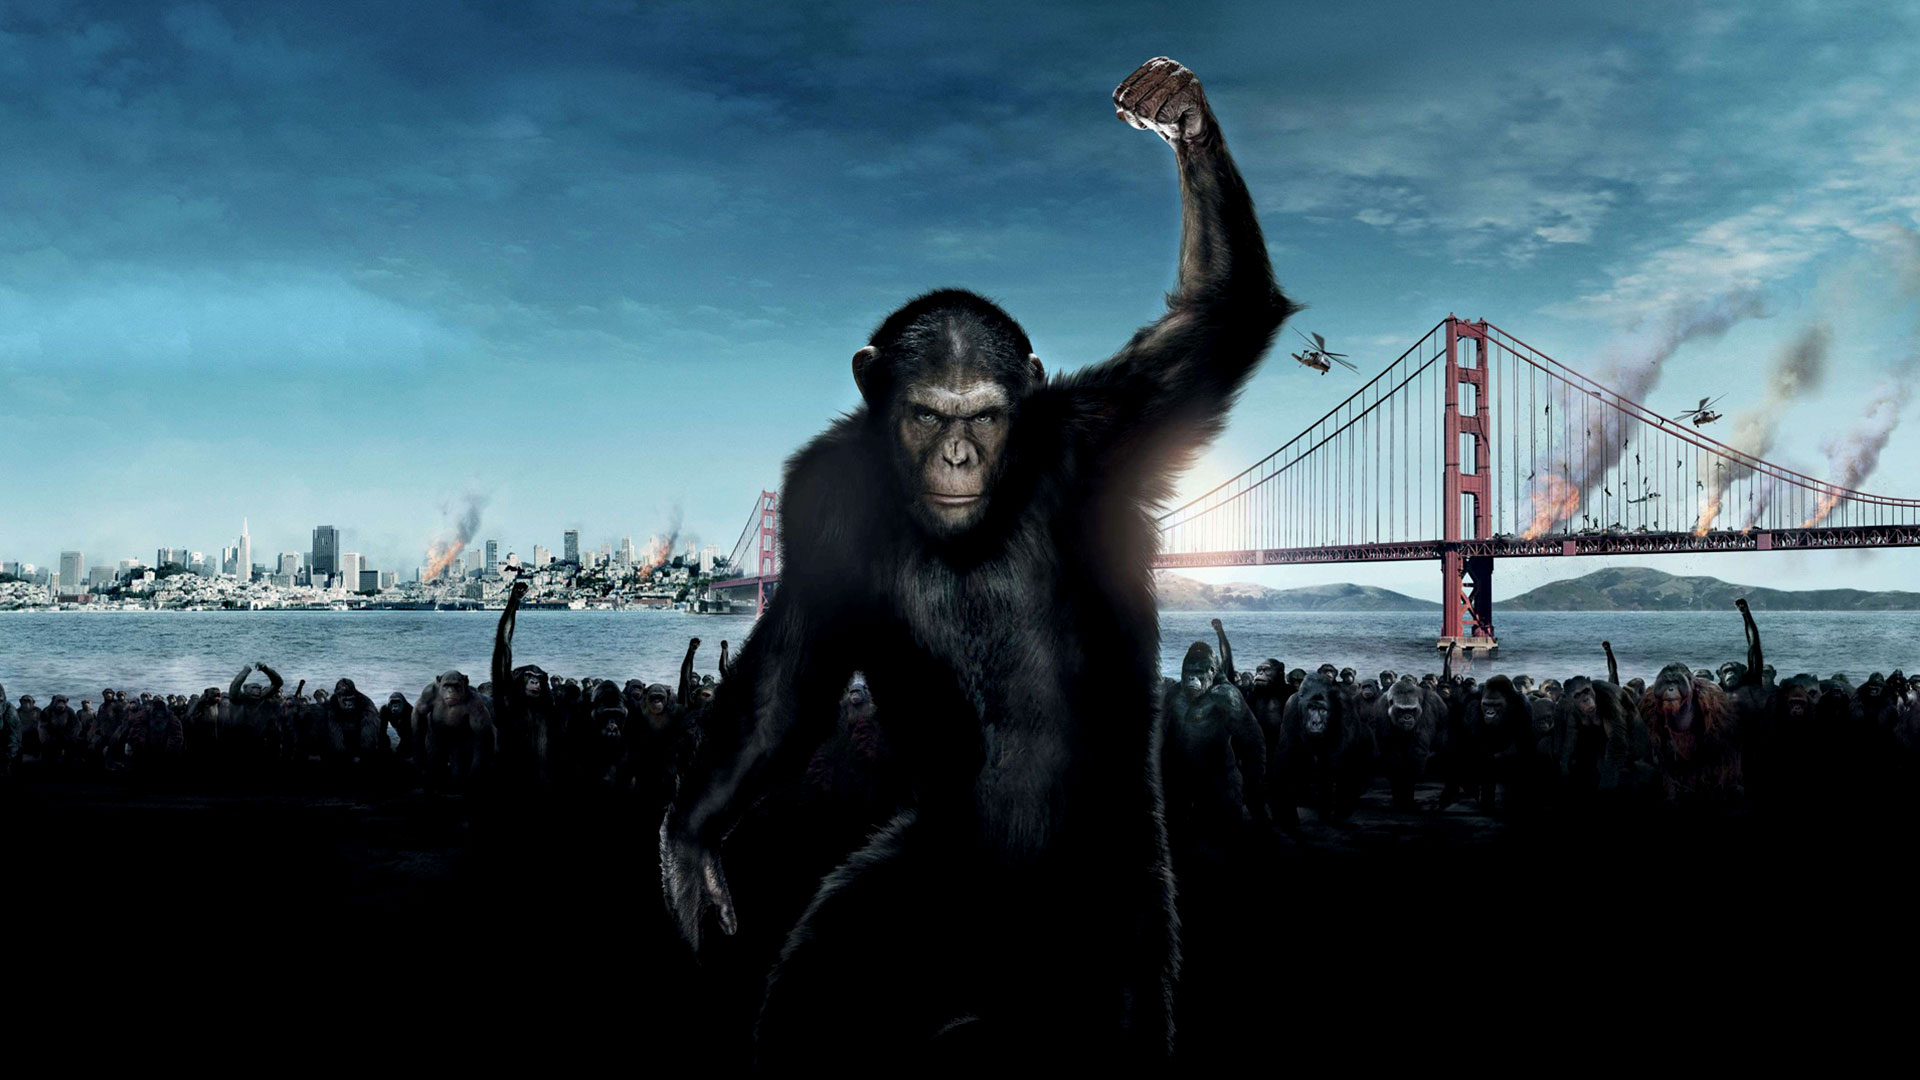 Восстание планеты обезьян 2011